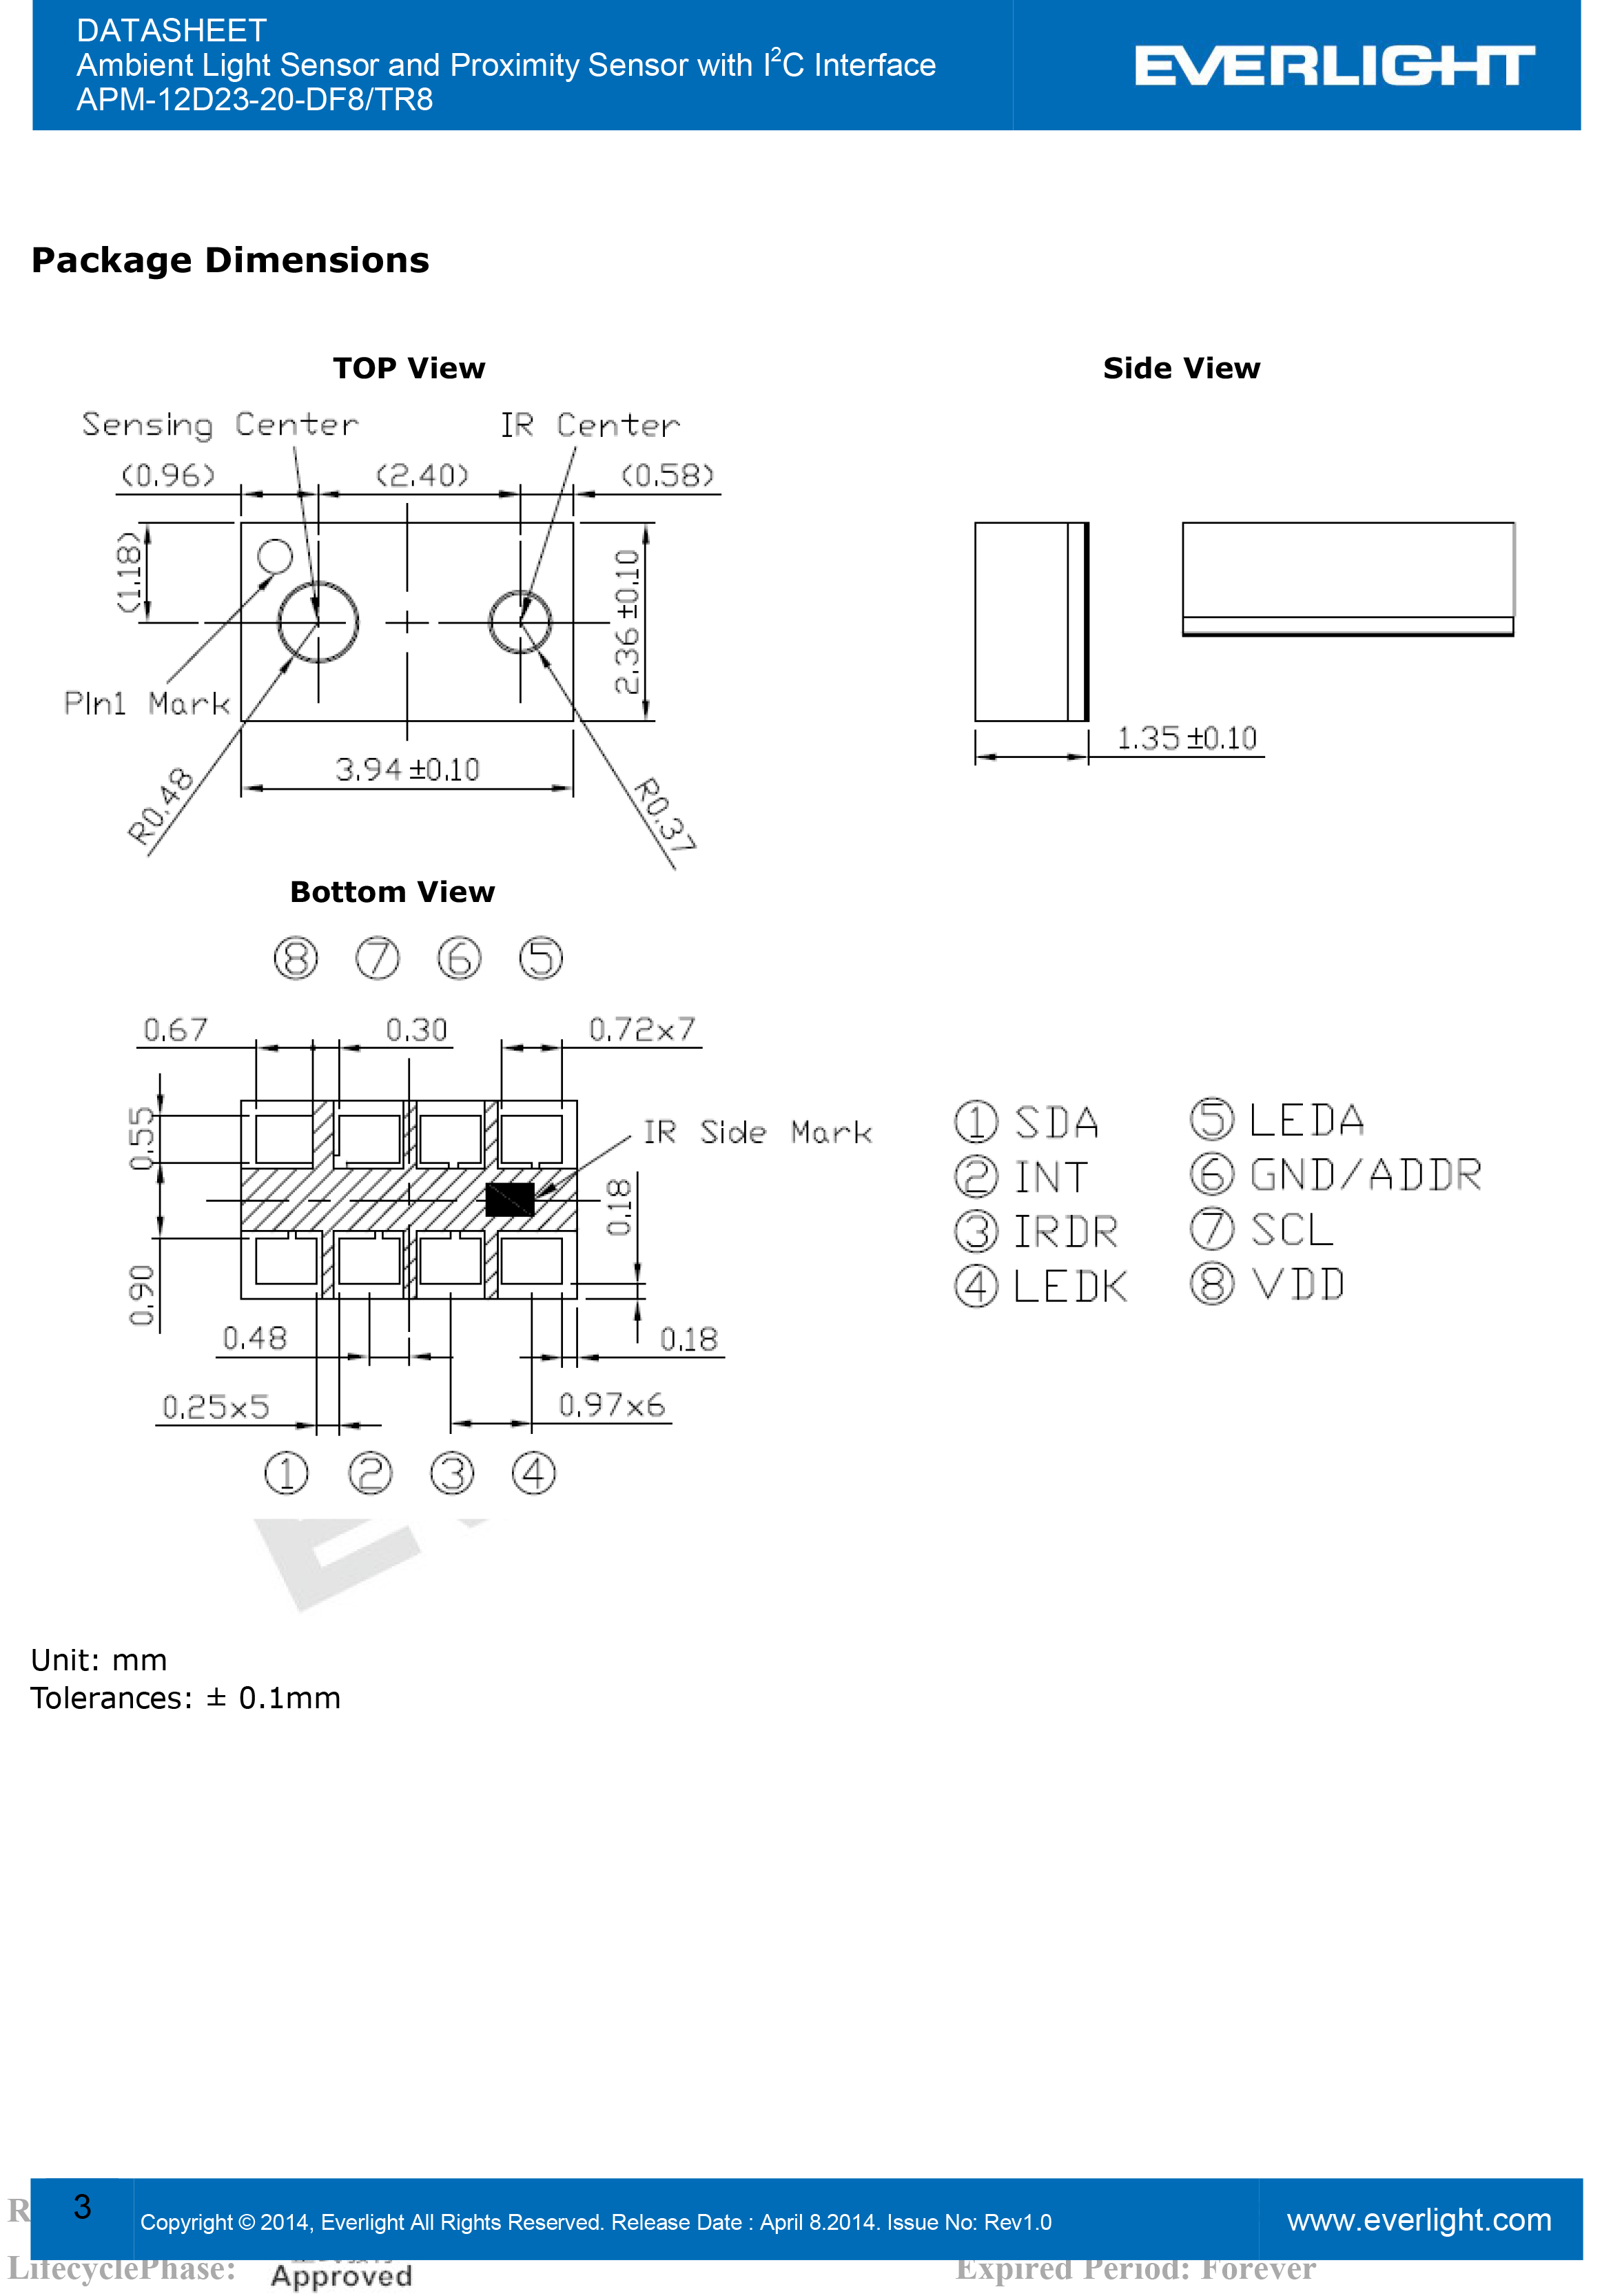 EVERLIGHT Ambient Light Sensor and Proximity Sensor APM-12D23-20-DF8/TR8 Datasheet